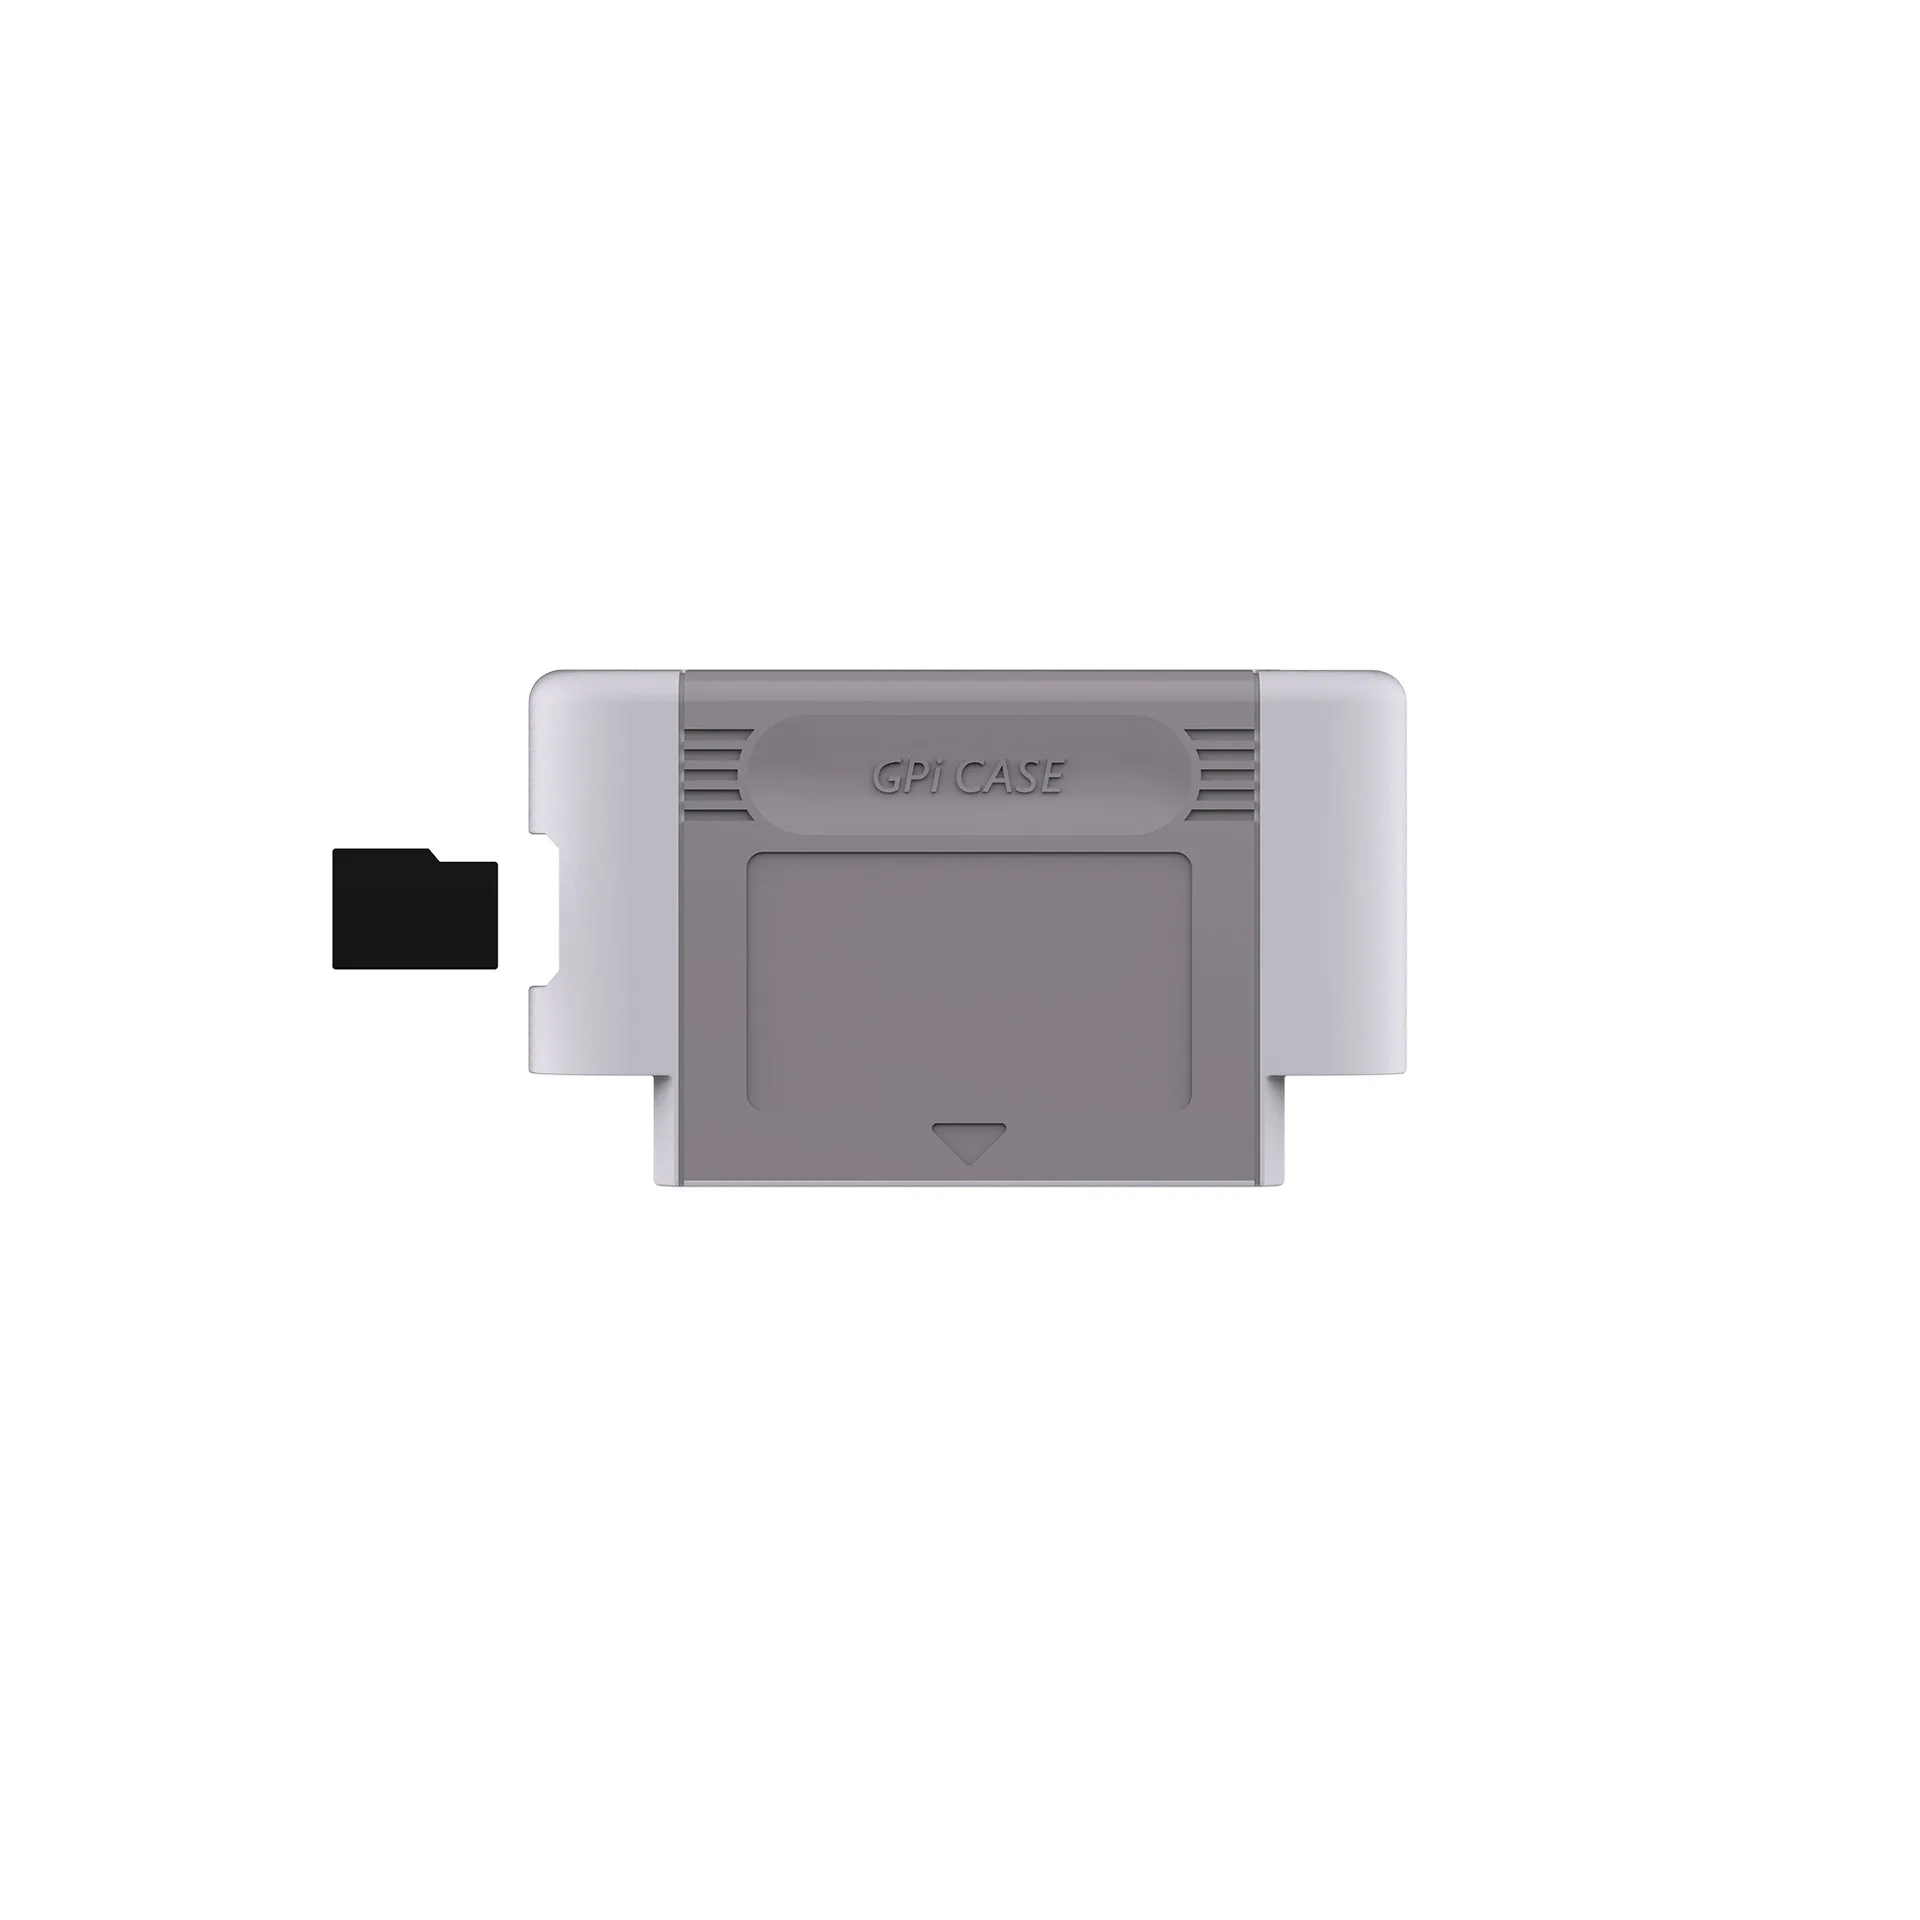 Retroflag GPi Чехол комплект с 32G Micro SD карта радиатор сумка для Raspberry Zero W GPi чехол